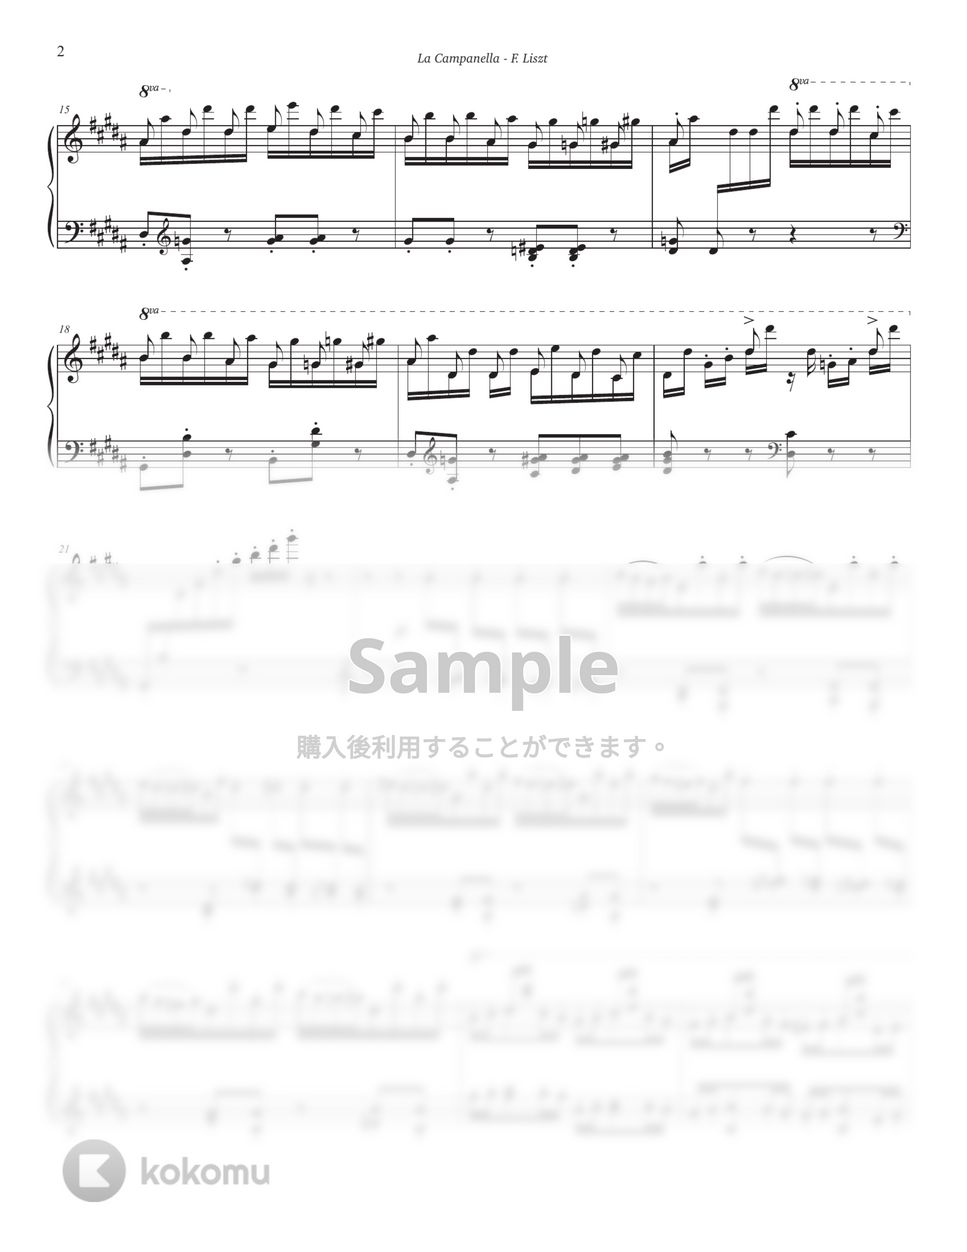 F. Liszt - La Campanella (中間レベル, G#m key) by Jinnie J